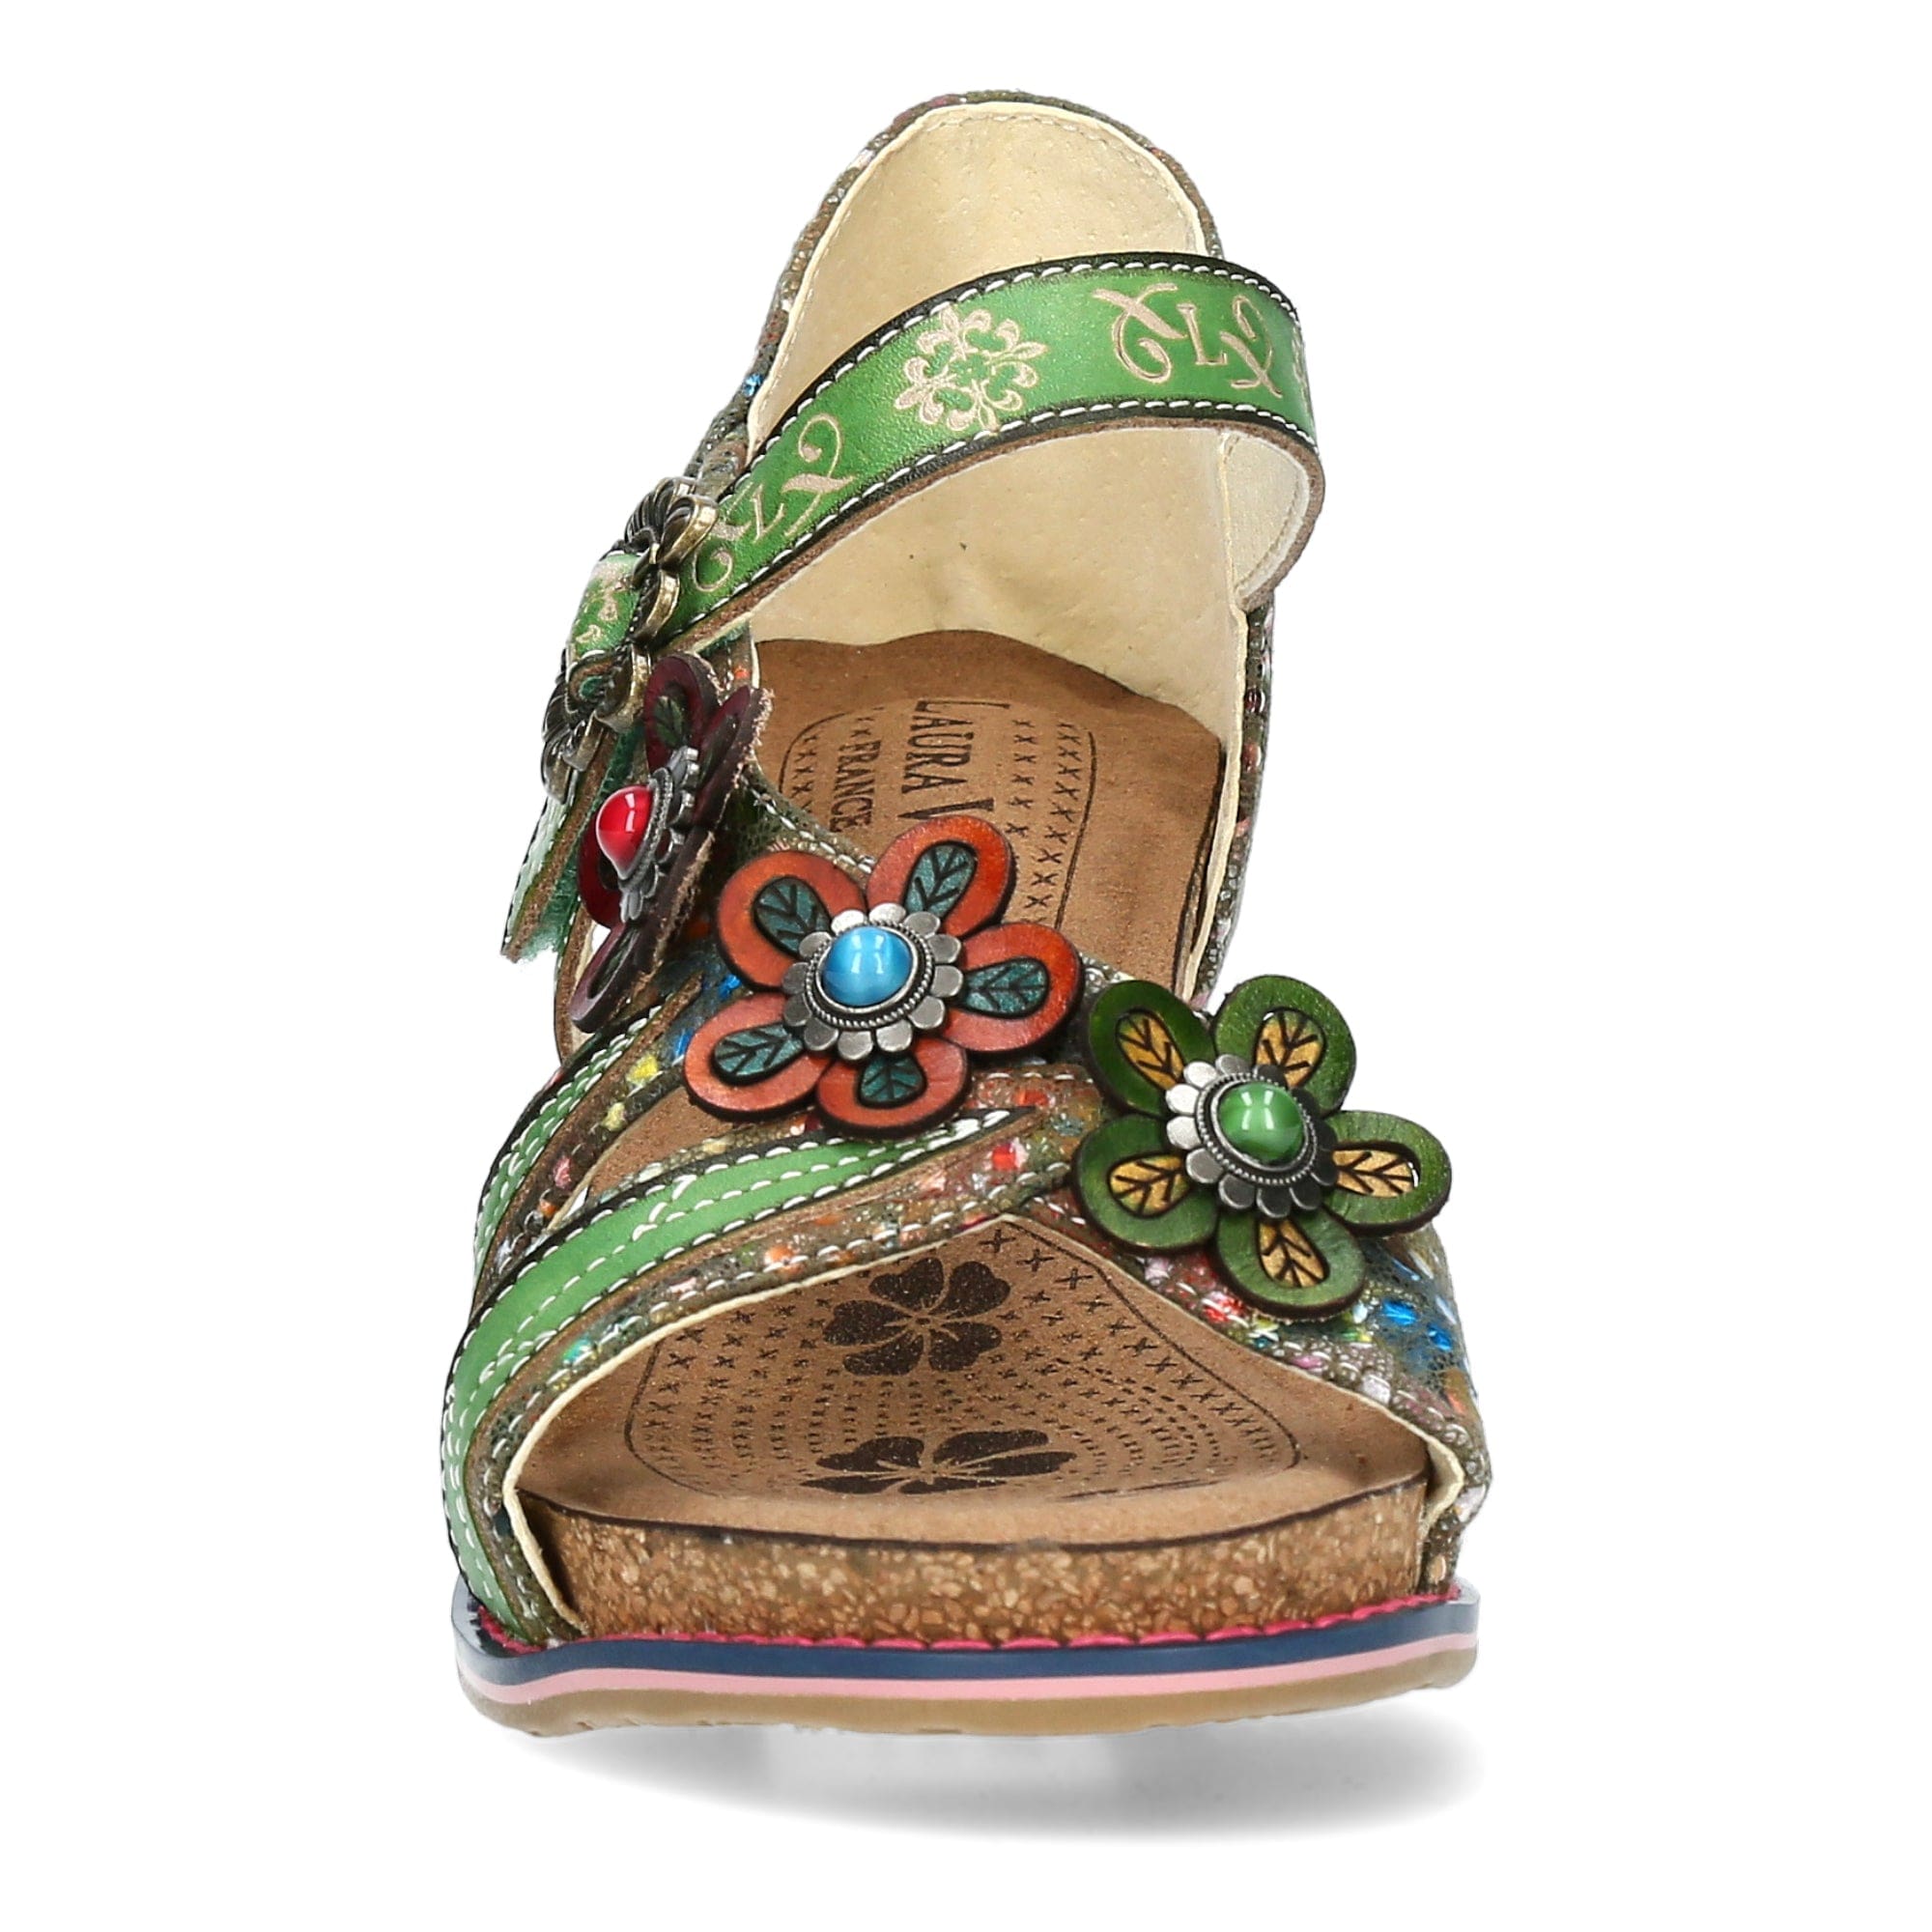 Chaussure DECBYO 03 - Sandale